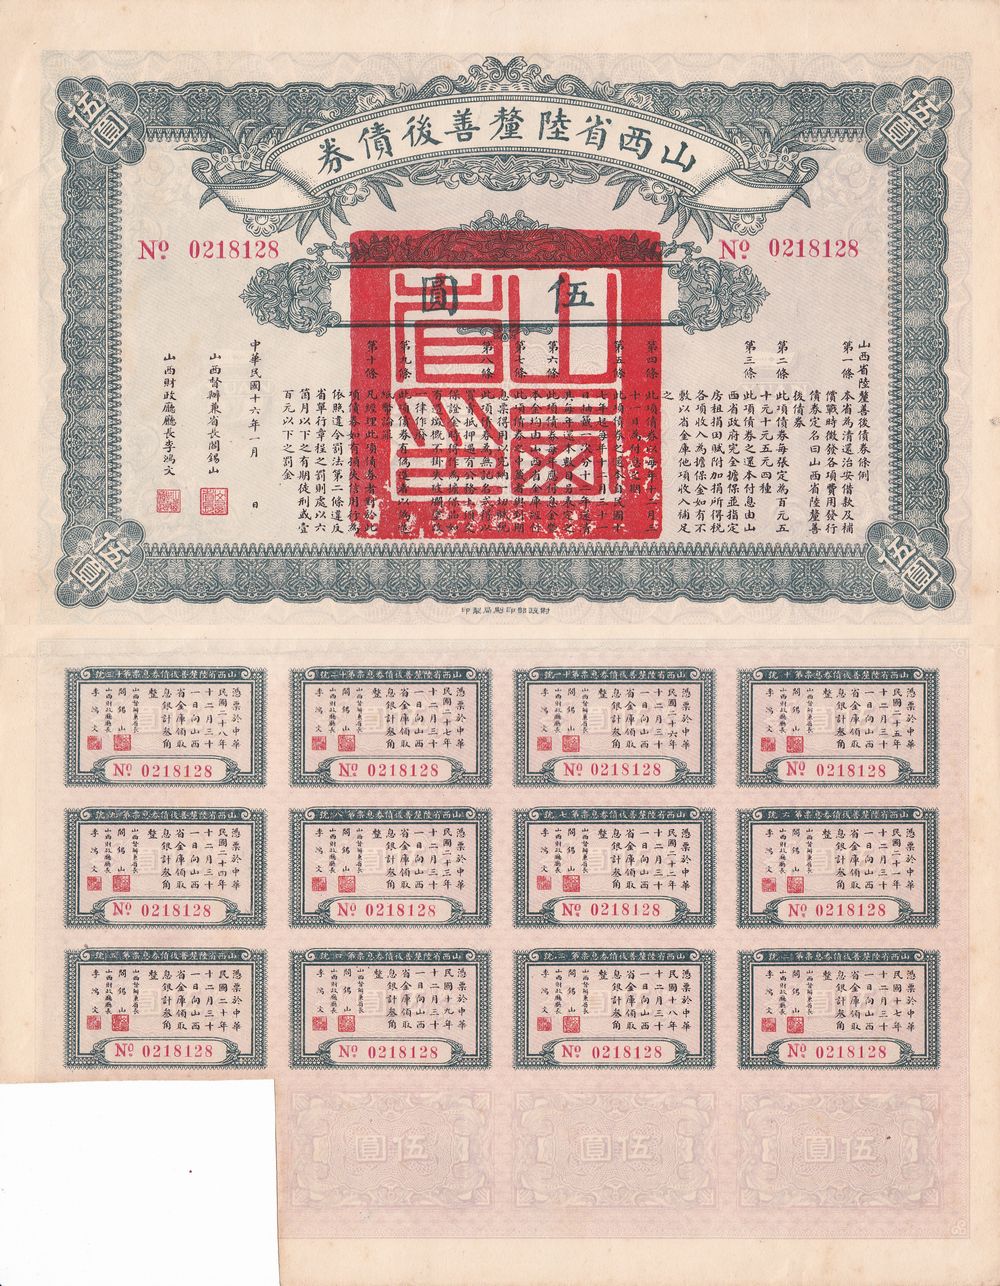 B2841, China 6% Shanxi Province Rehabilitation Loan, 5 Dollars 1927